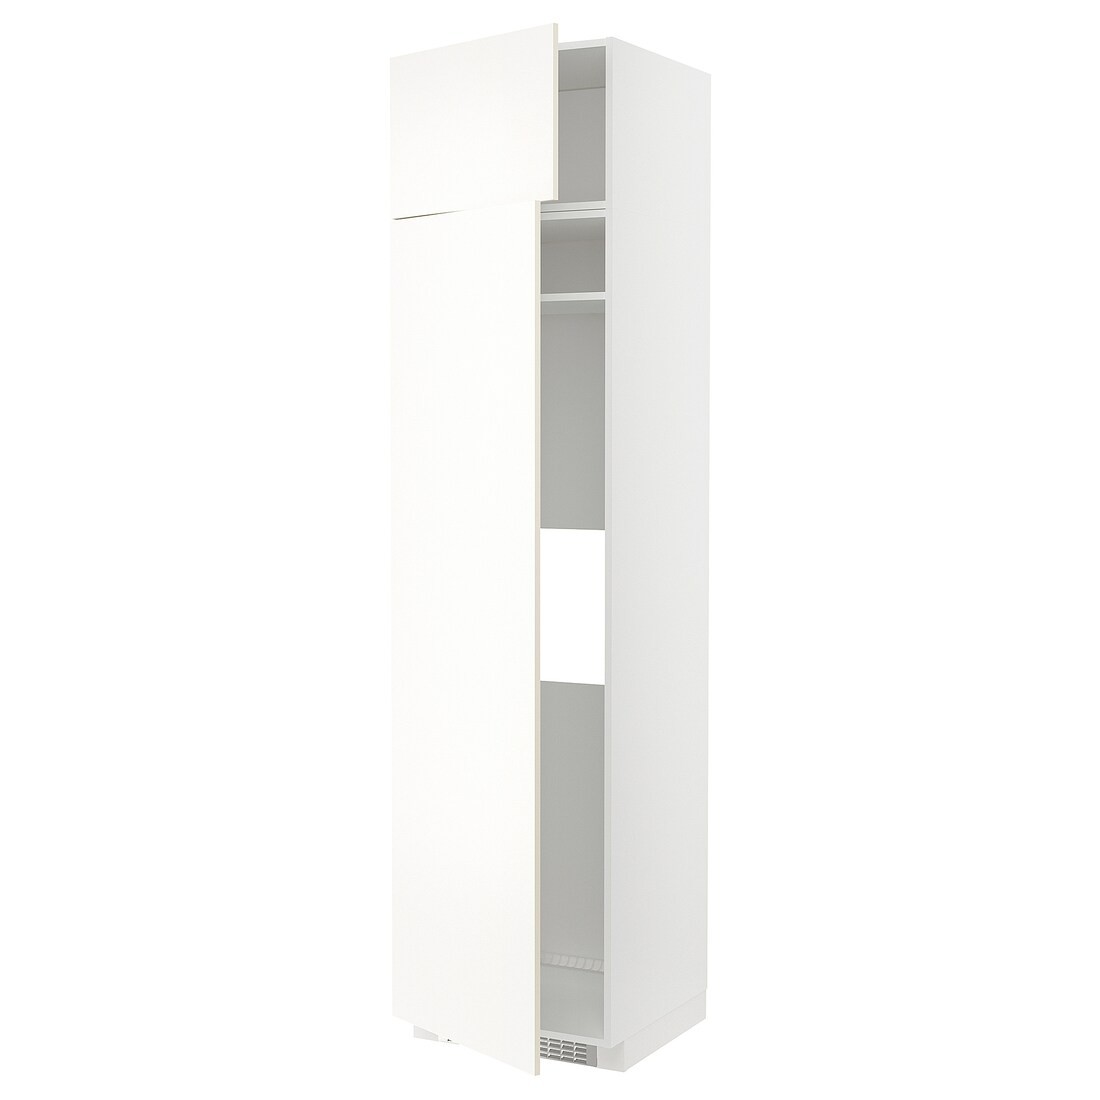 IKEA METOD МЕТОД Высокий шкаф для холодильника / морозильника, белый / Vallstena белый 09507368 | 095.073.68